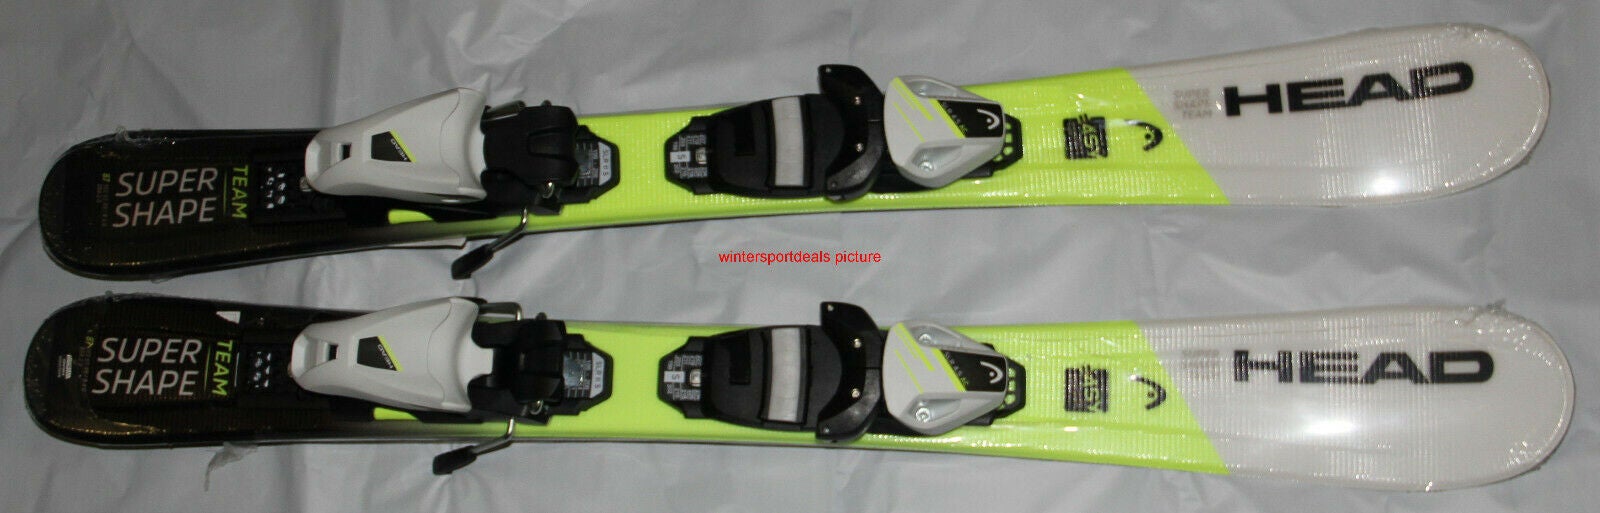 NEW HEAD Supershape team Easy kids skis 87cm + size adjustable bindings SLR4.5 NEW